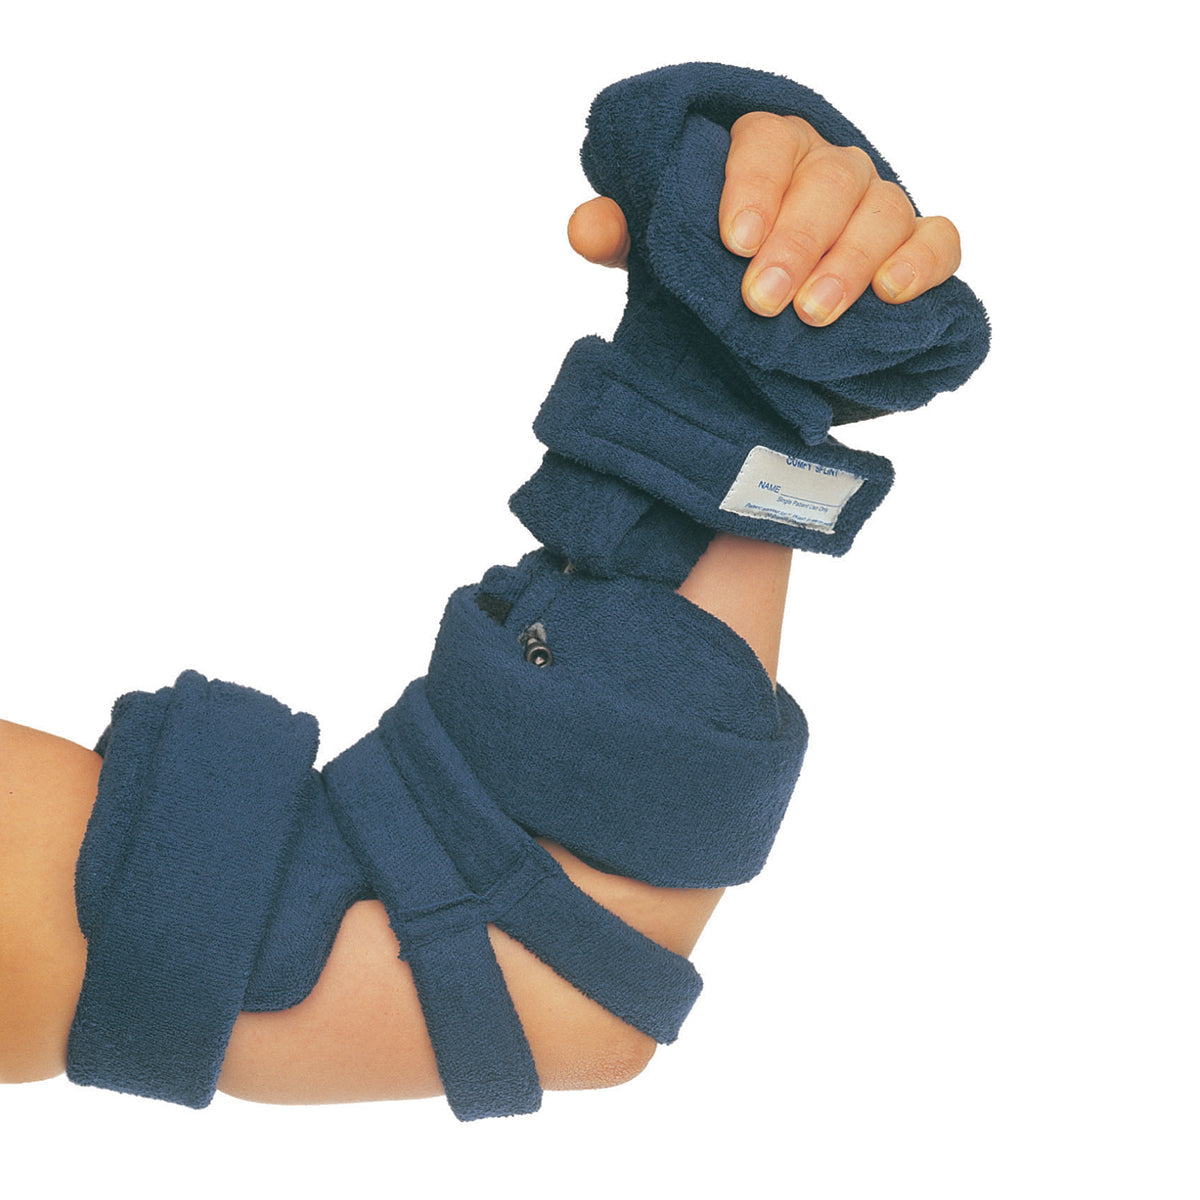 Pediatric Terry Cloth Goniometer Elbow Splint